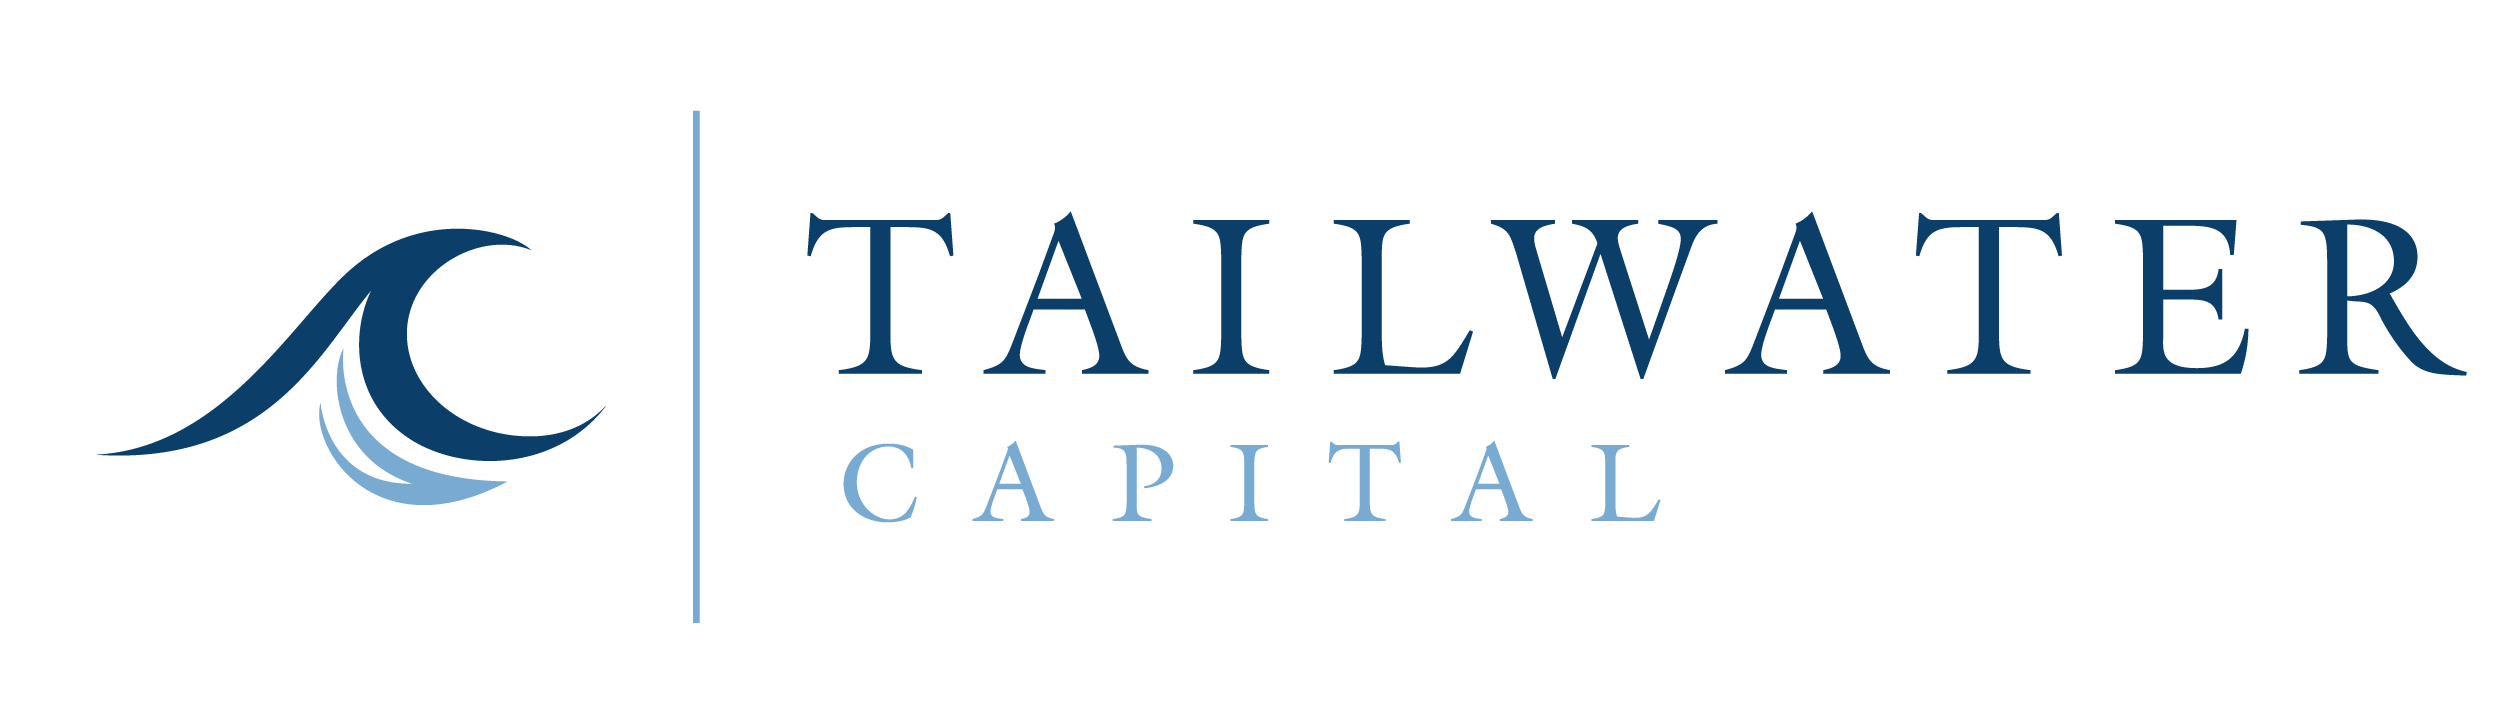 decorative: Tailwater Capital logo